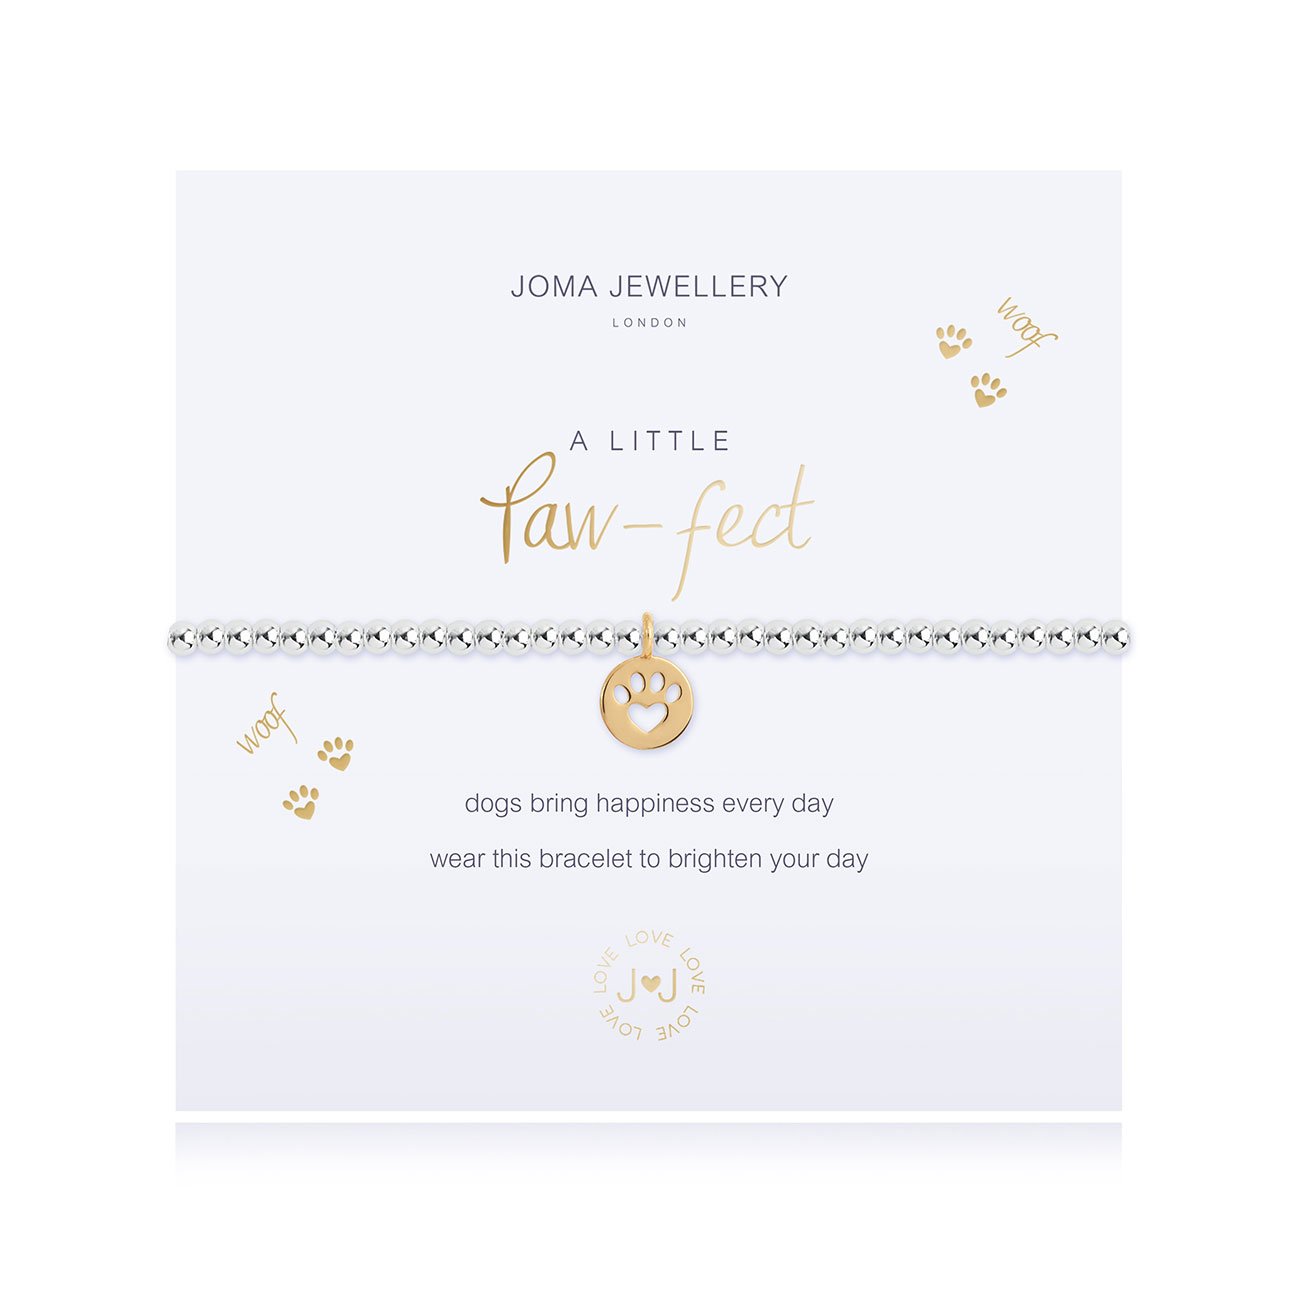 JOMA JEWELLERY - A LITTLE PURRRFECT BRACELET